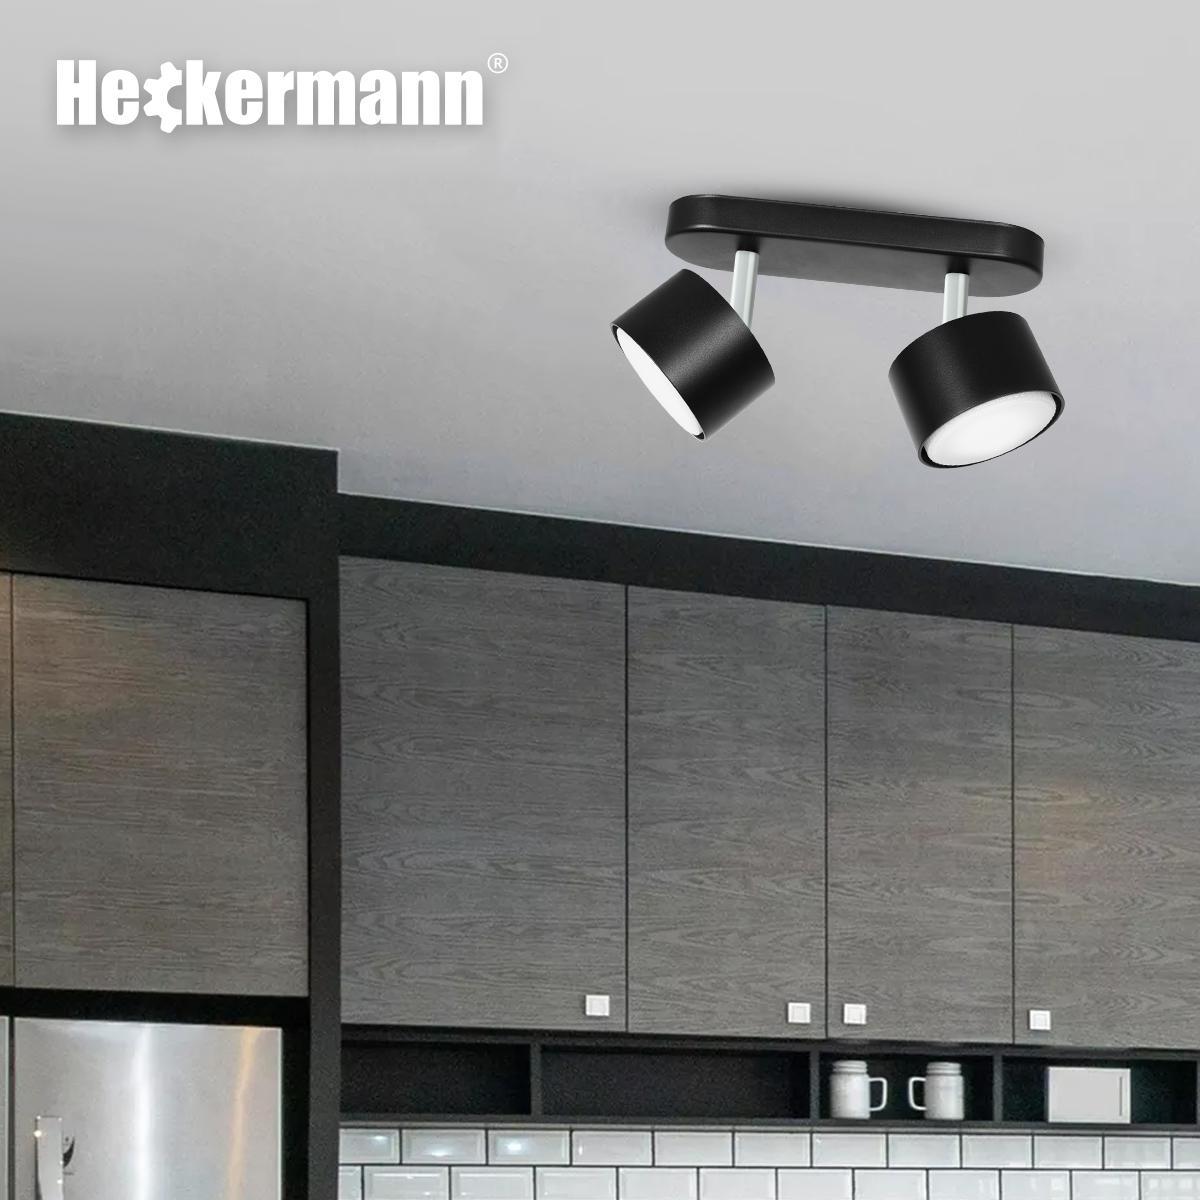 Lampa sufitowa punktowa LED Heckermann 8795314A Czarna 2x głowica 4 Full Screen